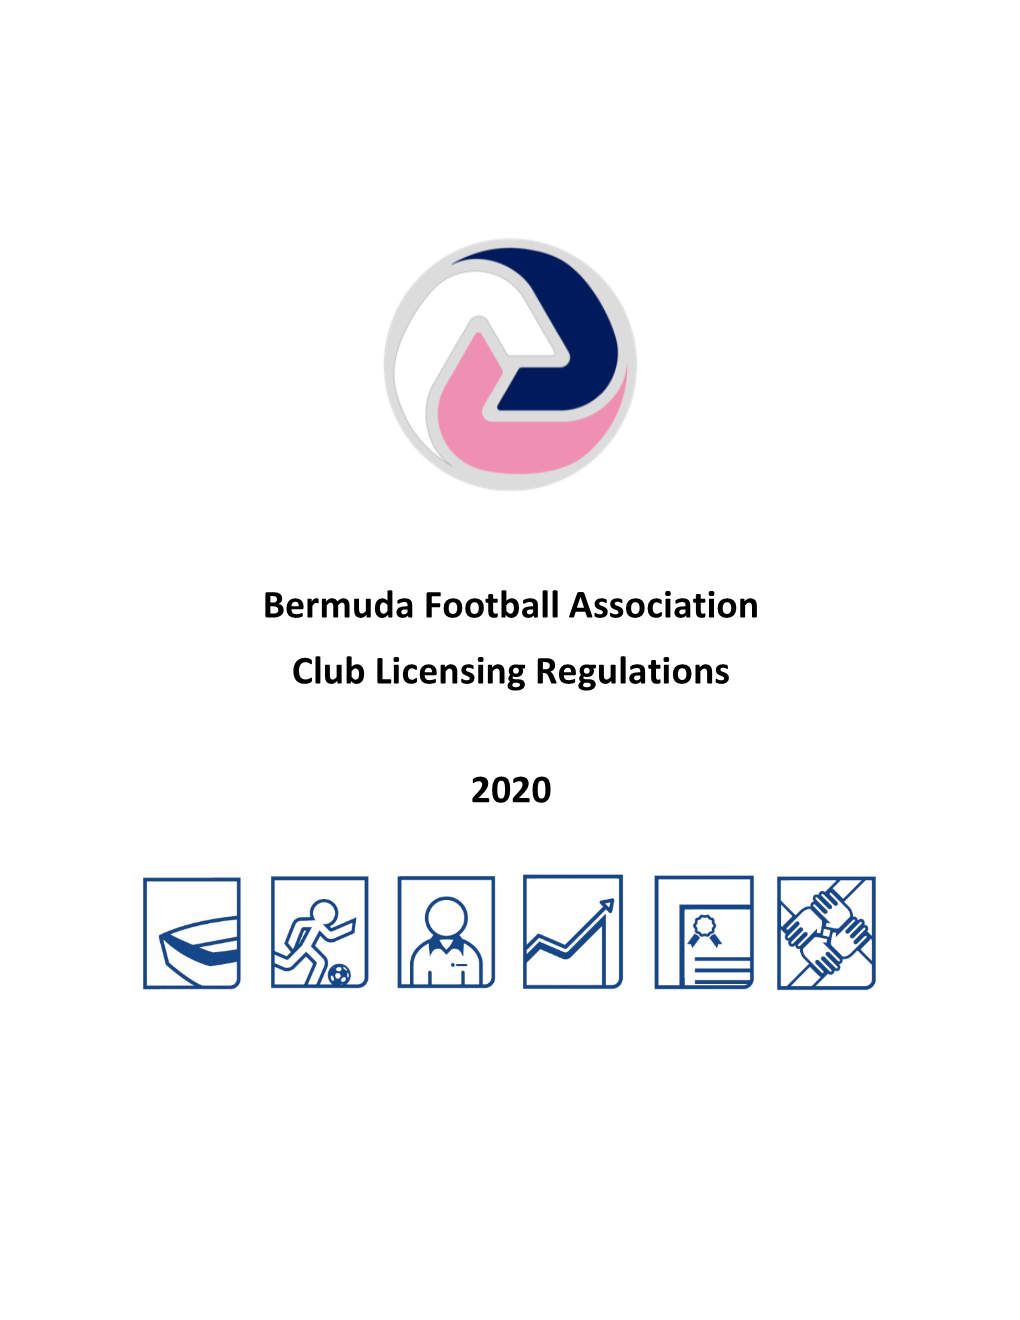 Bermuda Football Association Club Licensing Regulations 2020